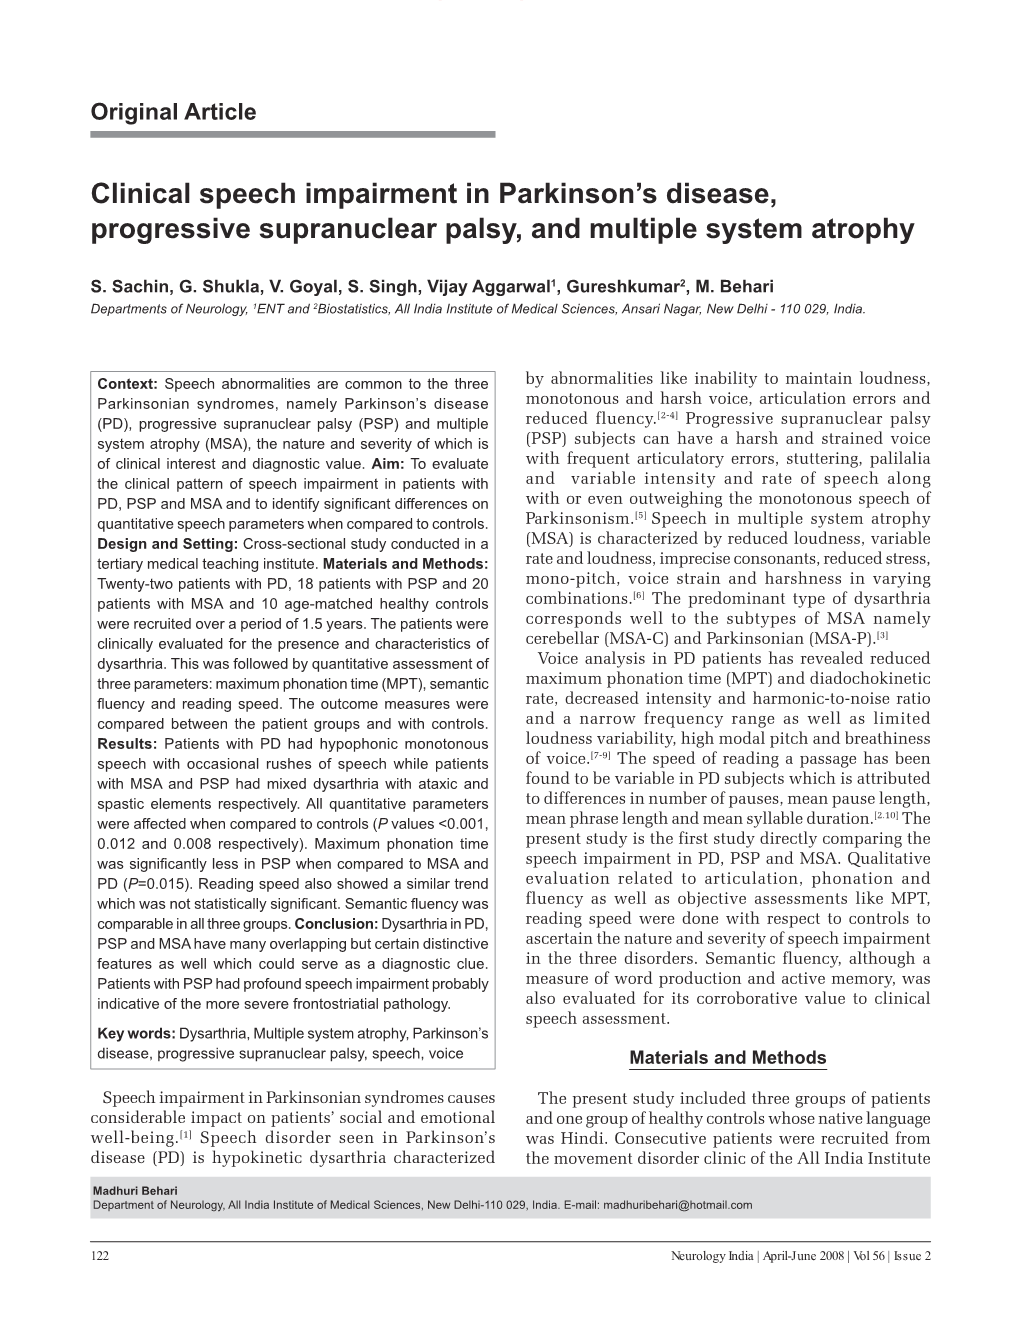 Clinical Speech Impairment in Parkinson's Disease